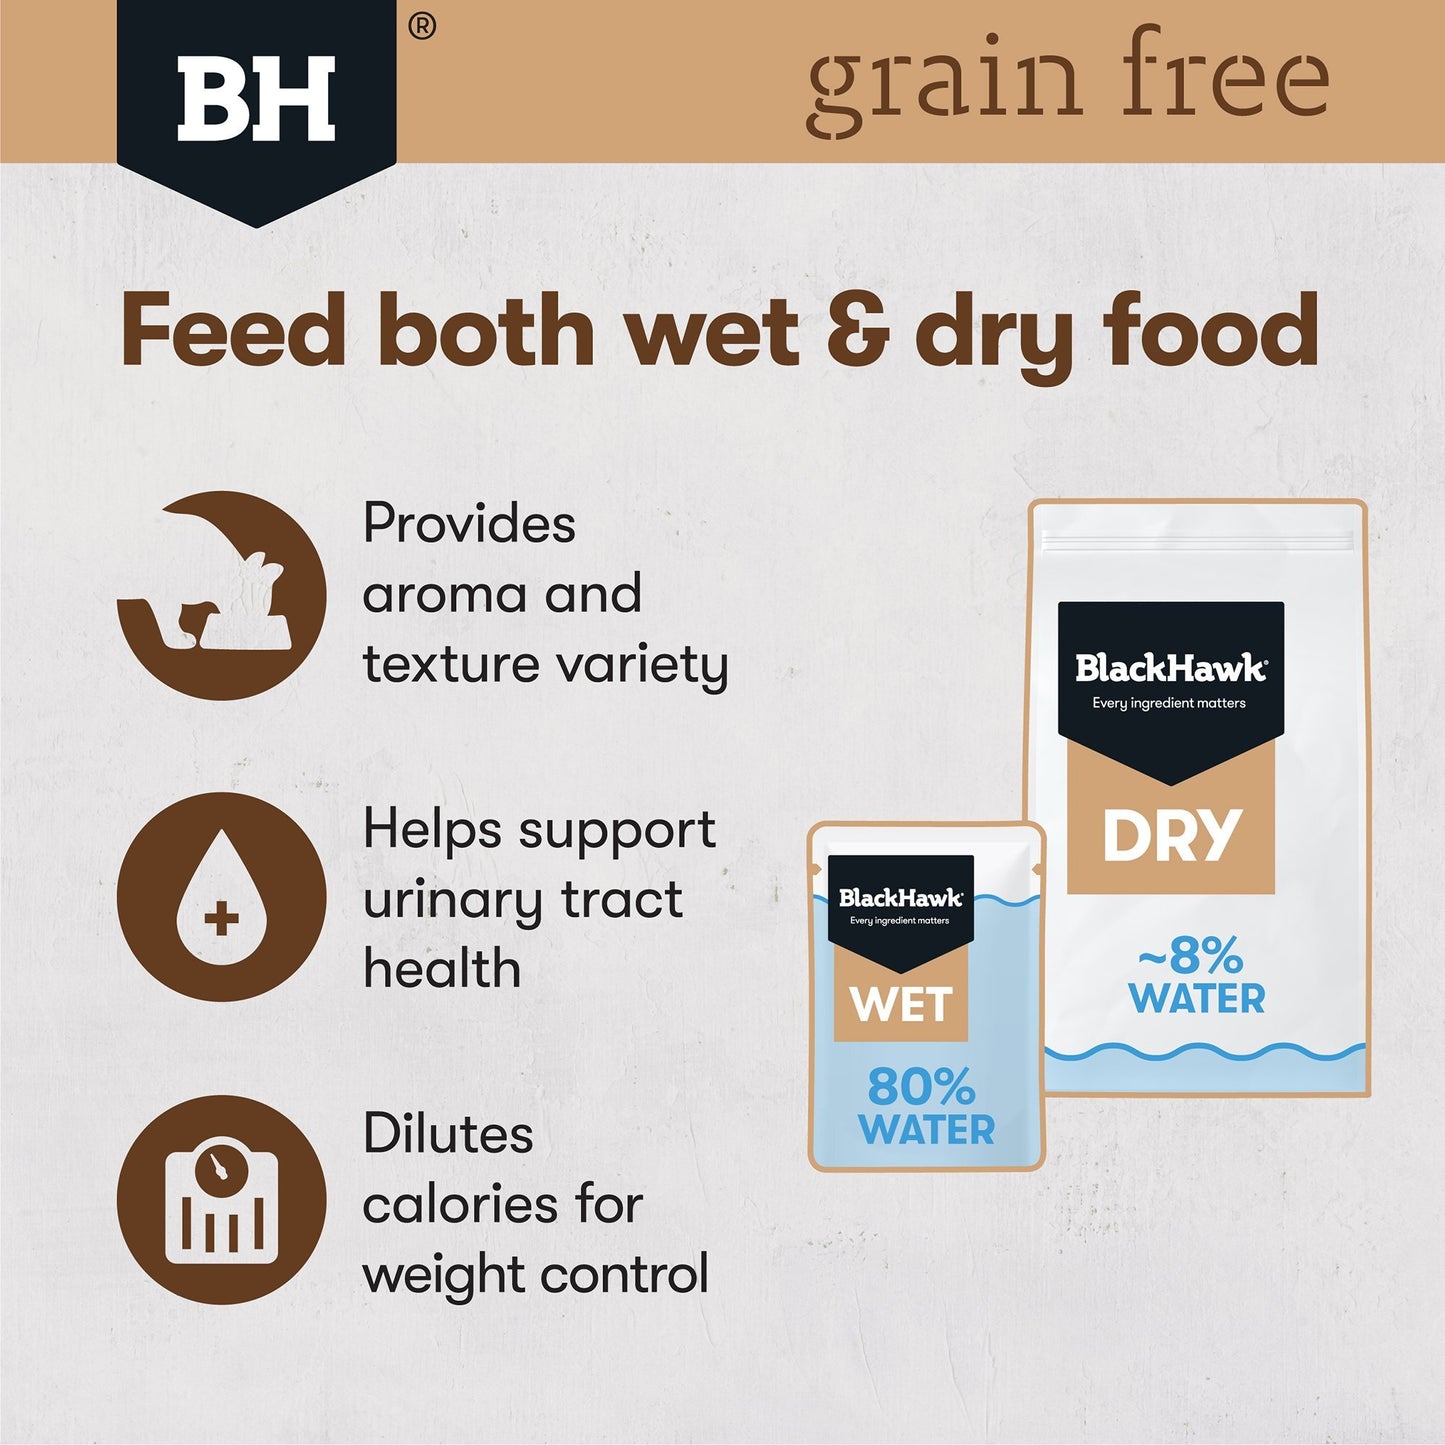 Black Hawk Wet Cat Food Grain Free Kitten Chicken with Peas & Broth 85g - Woonona Petfood & Produce